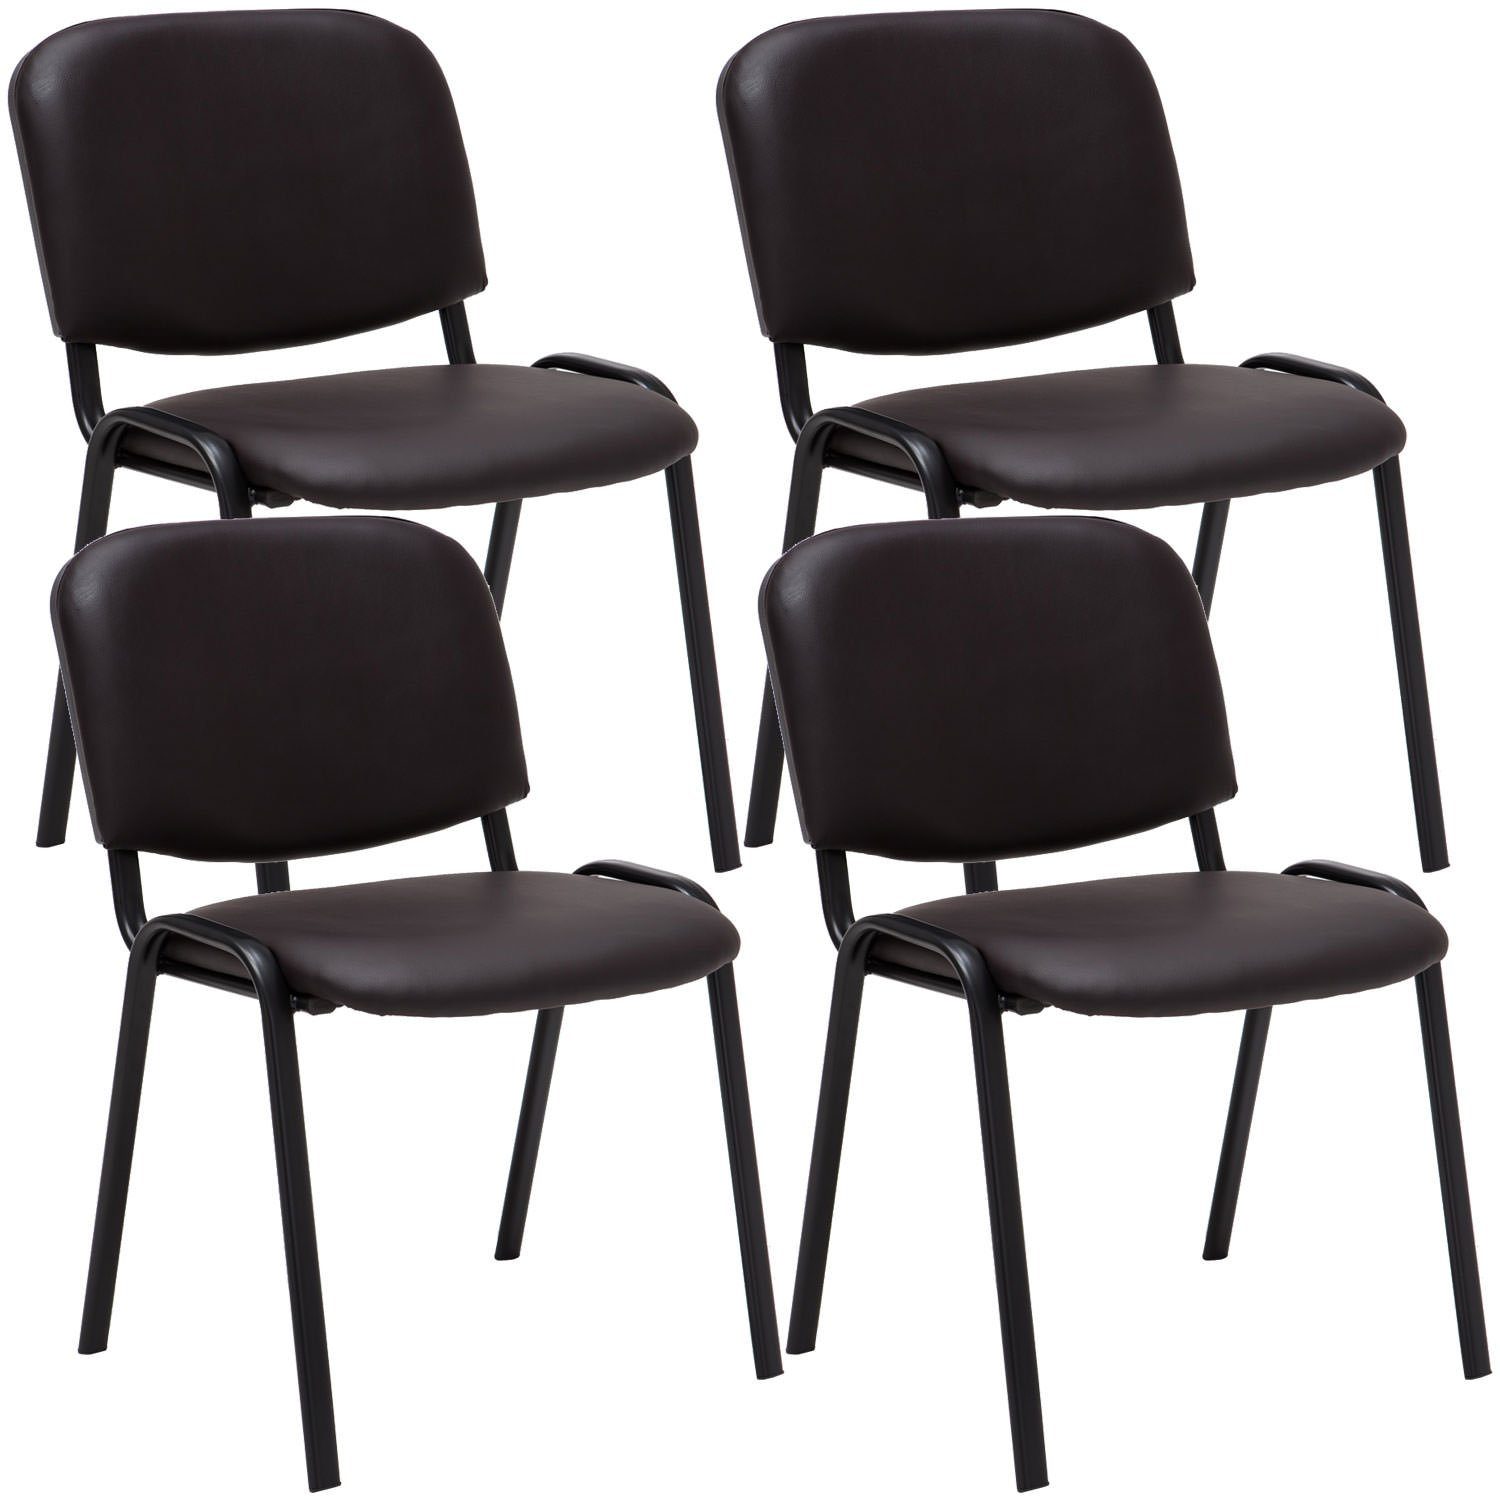 TPFLiving Besucherstuhl Keen mit hochwertiger Polsterung - Konferenzstuhl (Besprechungsstuhl - Warteraumstuhl - Messestuhl, 4 St), Gestell: Metall matt schwarz - Sitzfläche: Kunstleder braun